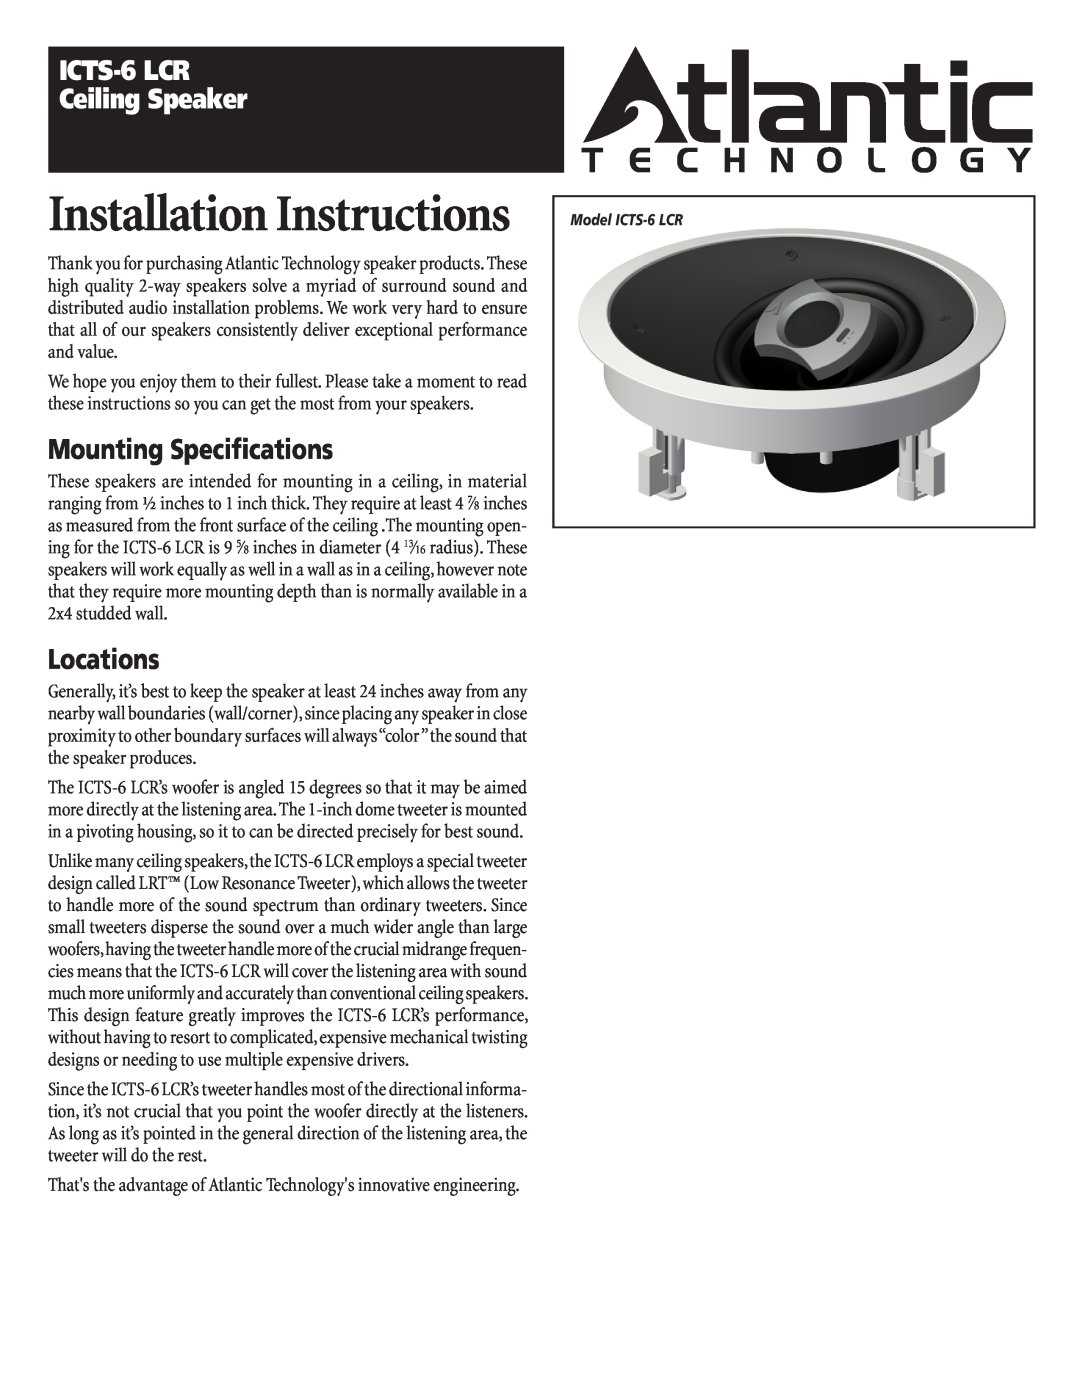 Atlantic Technology ICTS-6 LCR installation instructions Installation Instructions, ICTS-6LCR Ceiling Speaker, Locations 